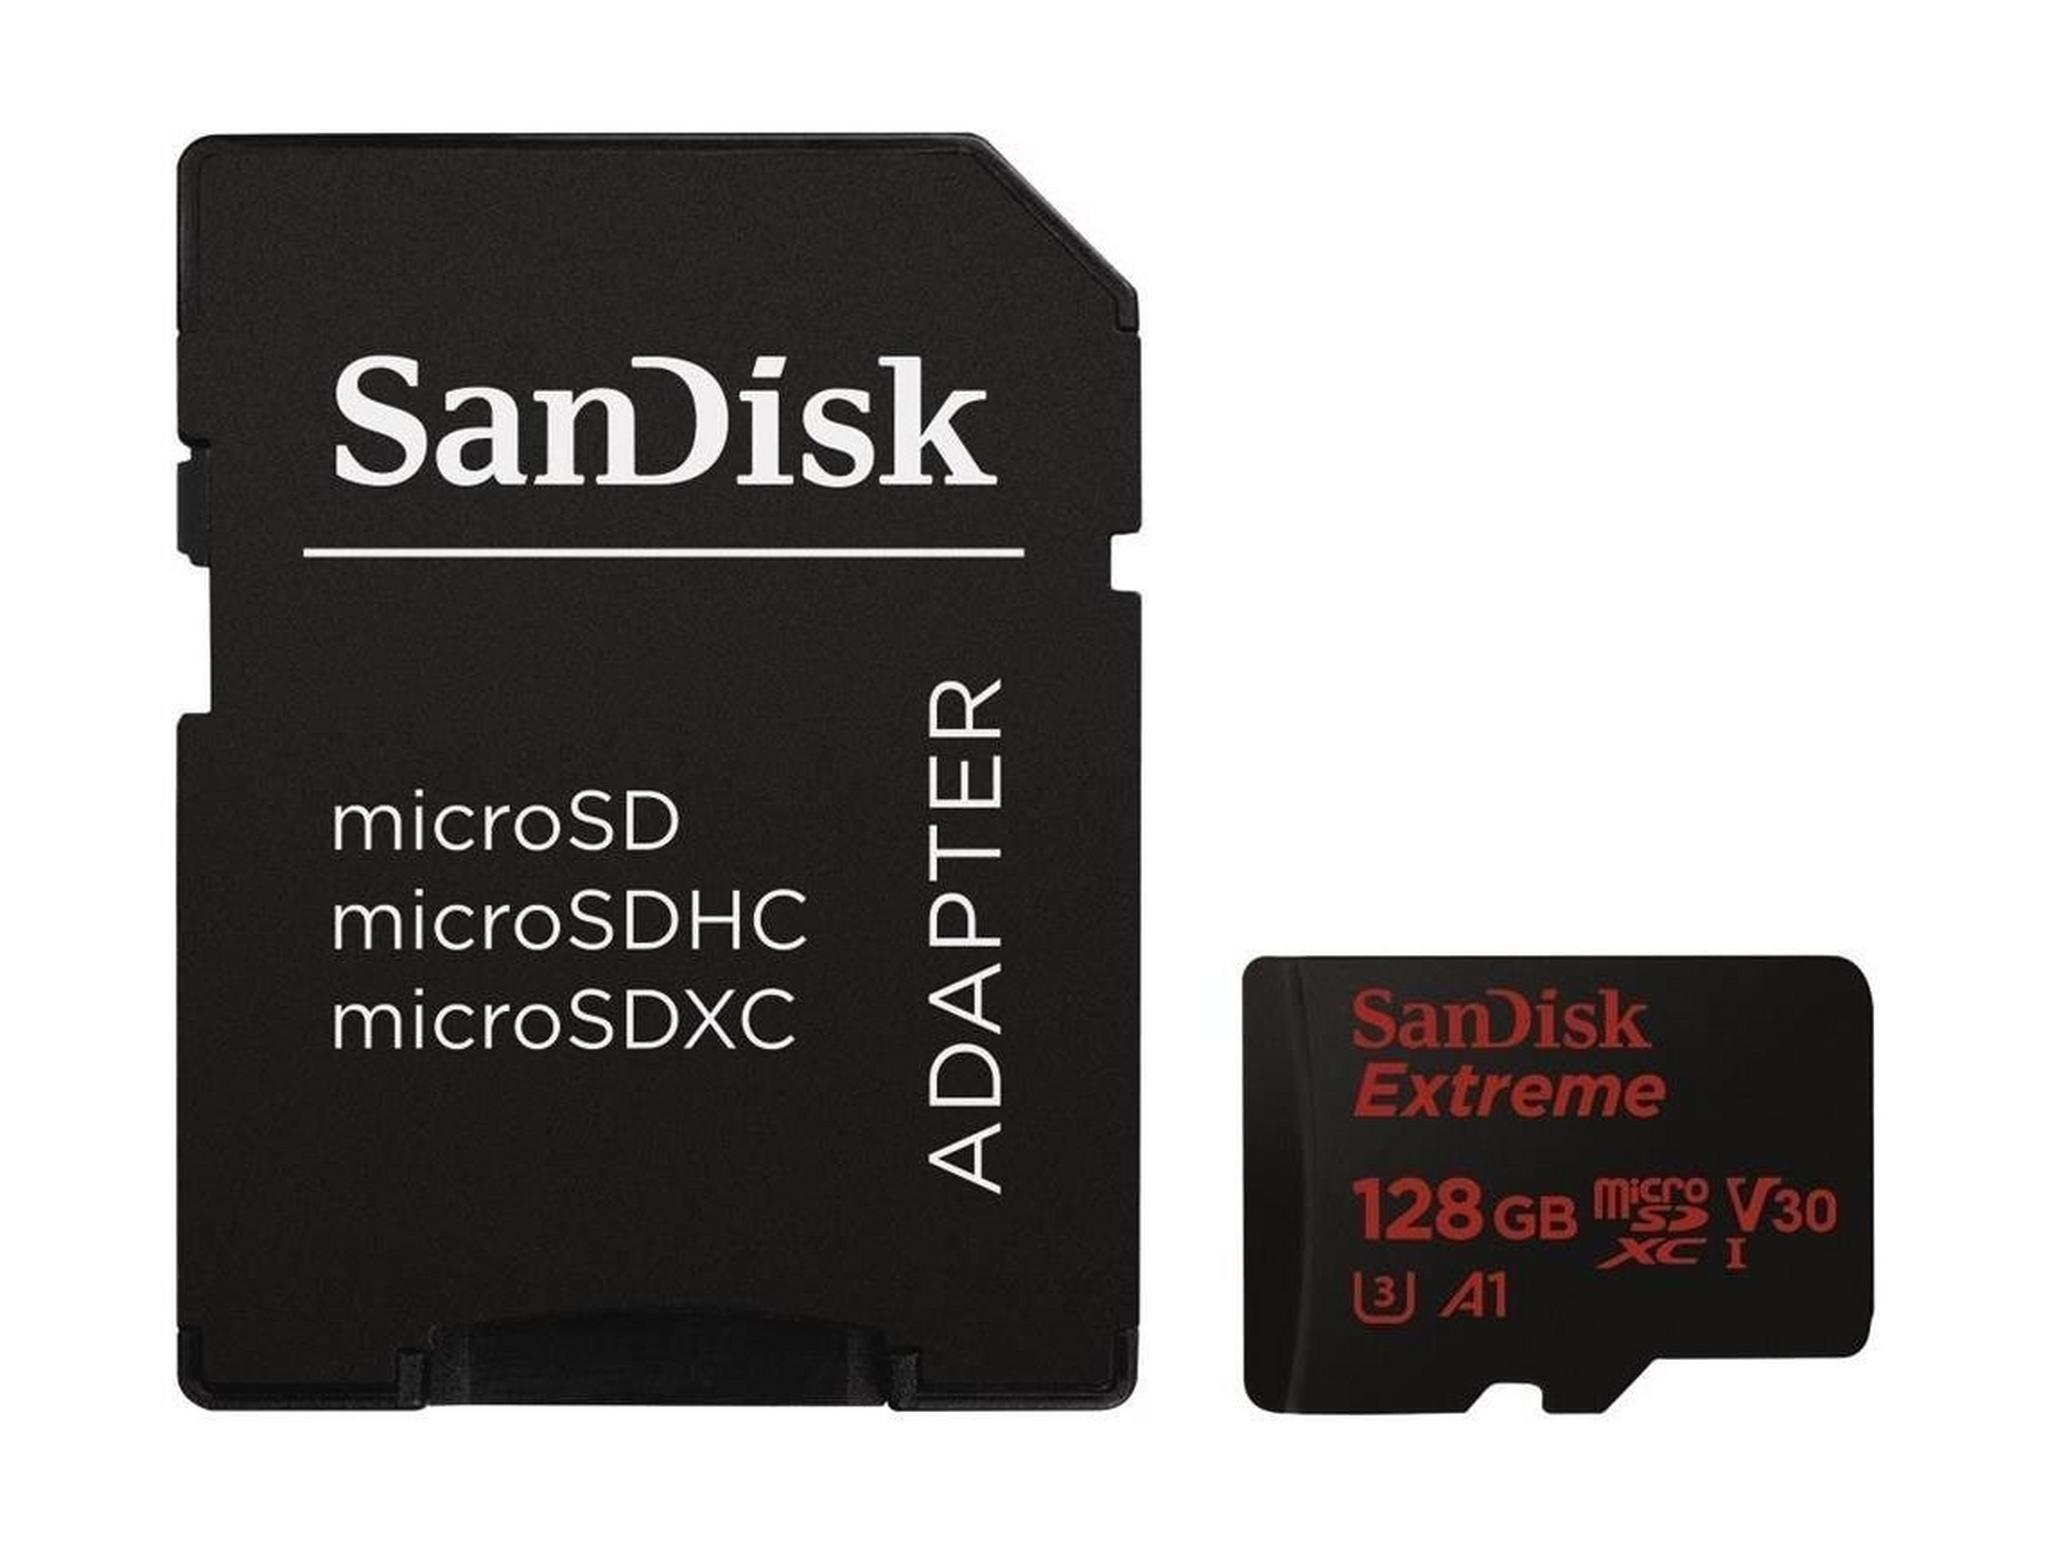 Sandisk Extreme 128GB 4K UHS-I Micro SDXC 100MB/S Memory Card